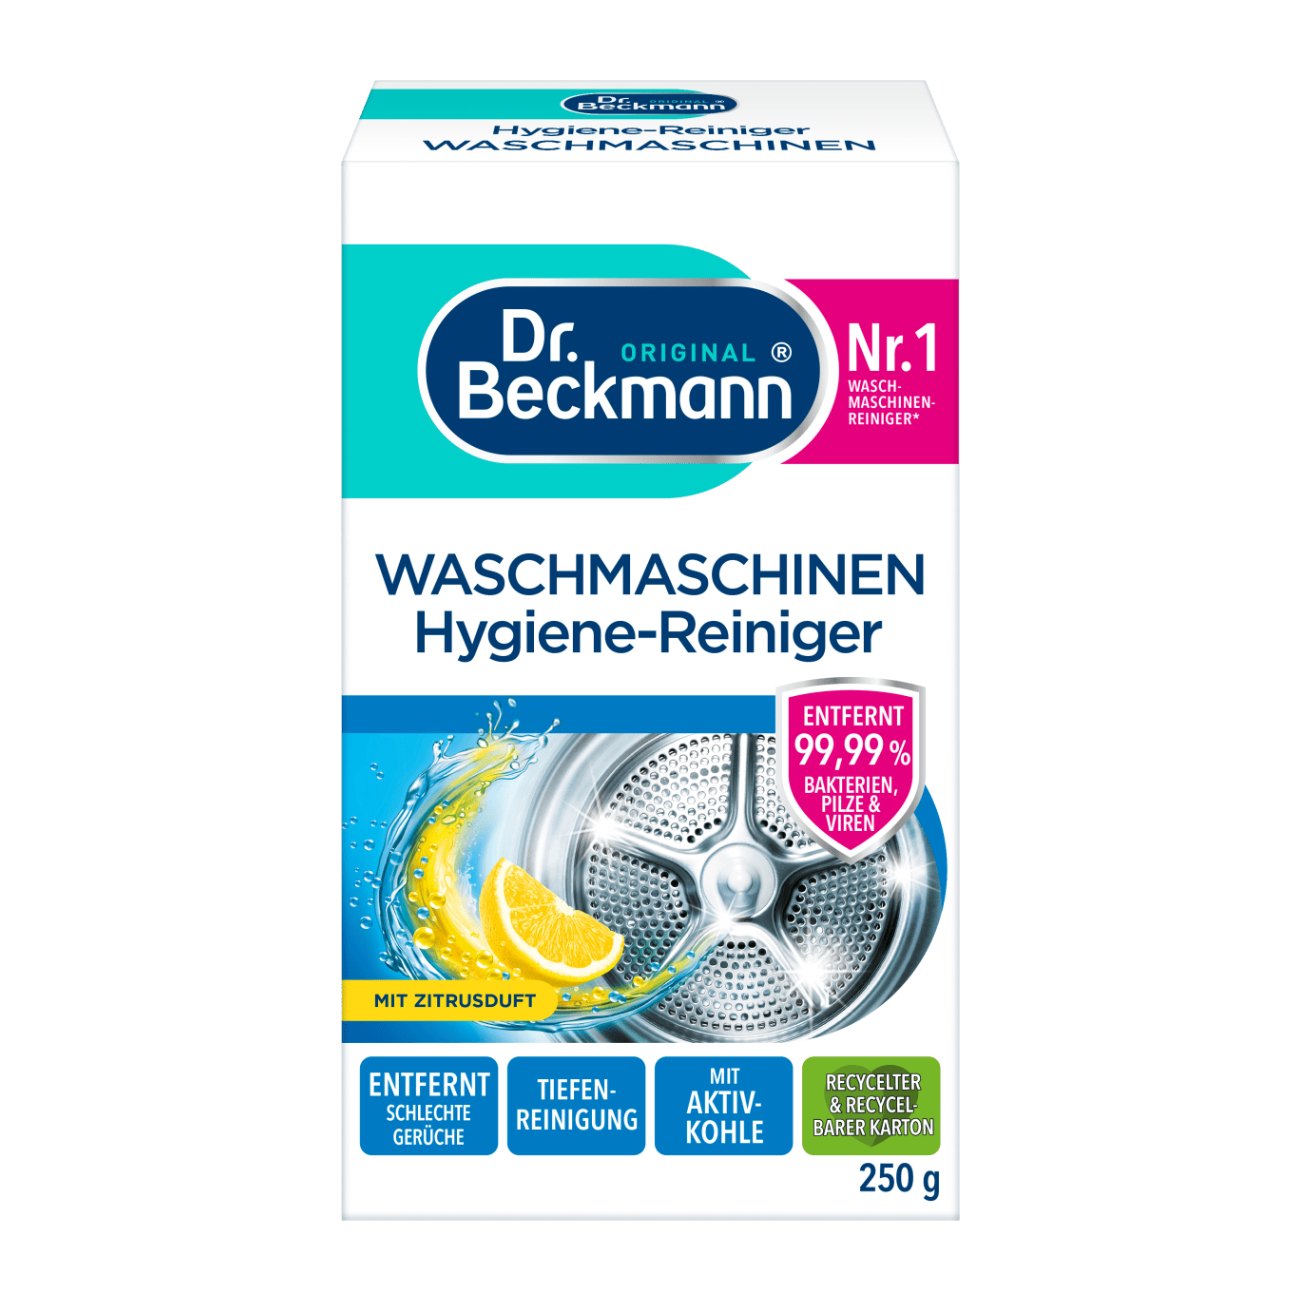 Dr. Beckmann Super Bianco 80 g